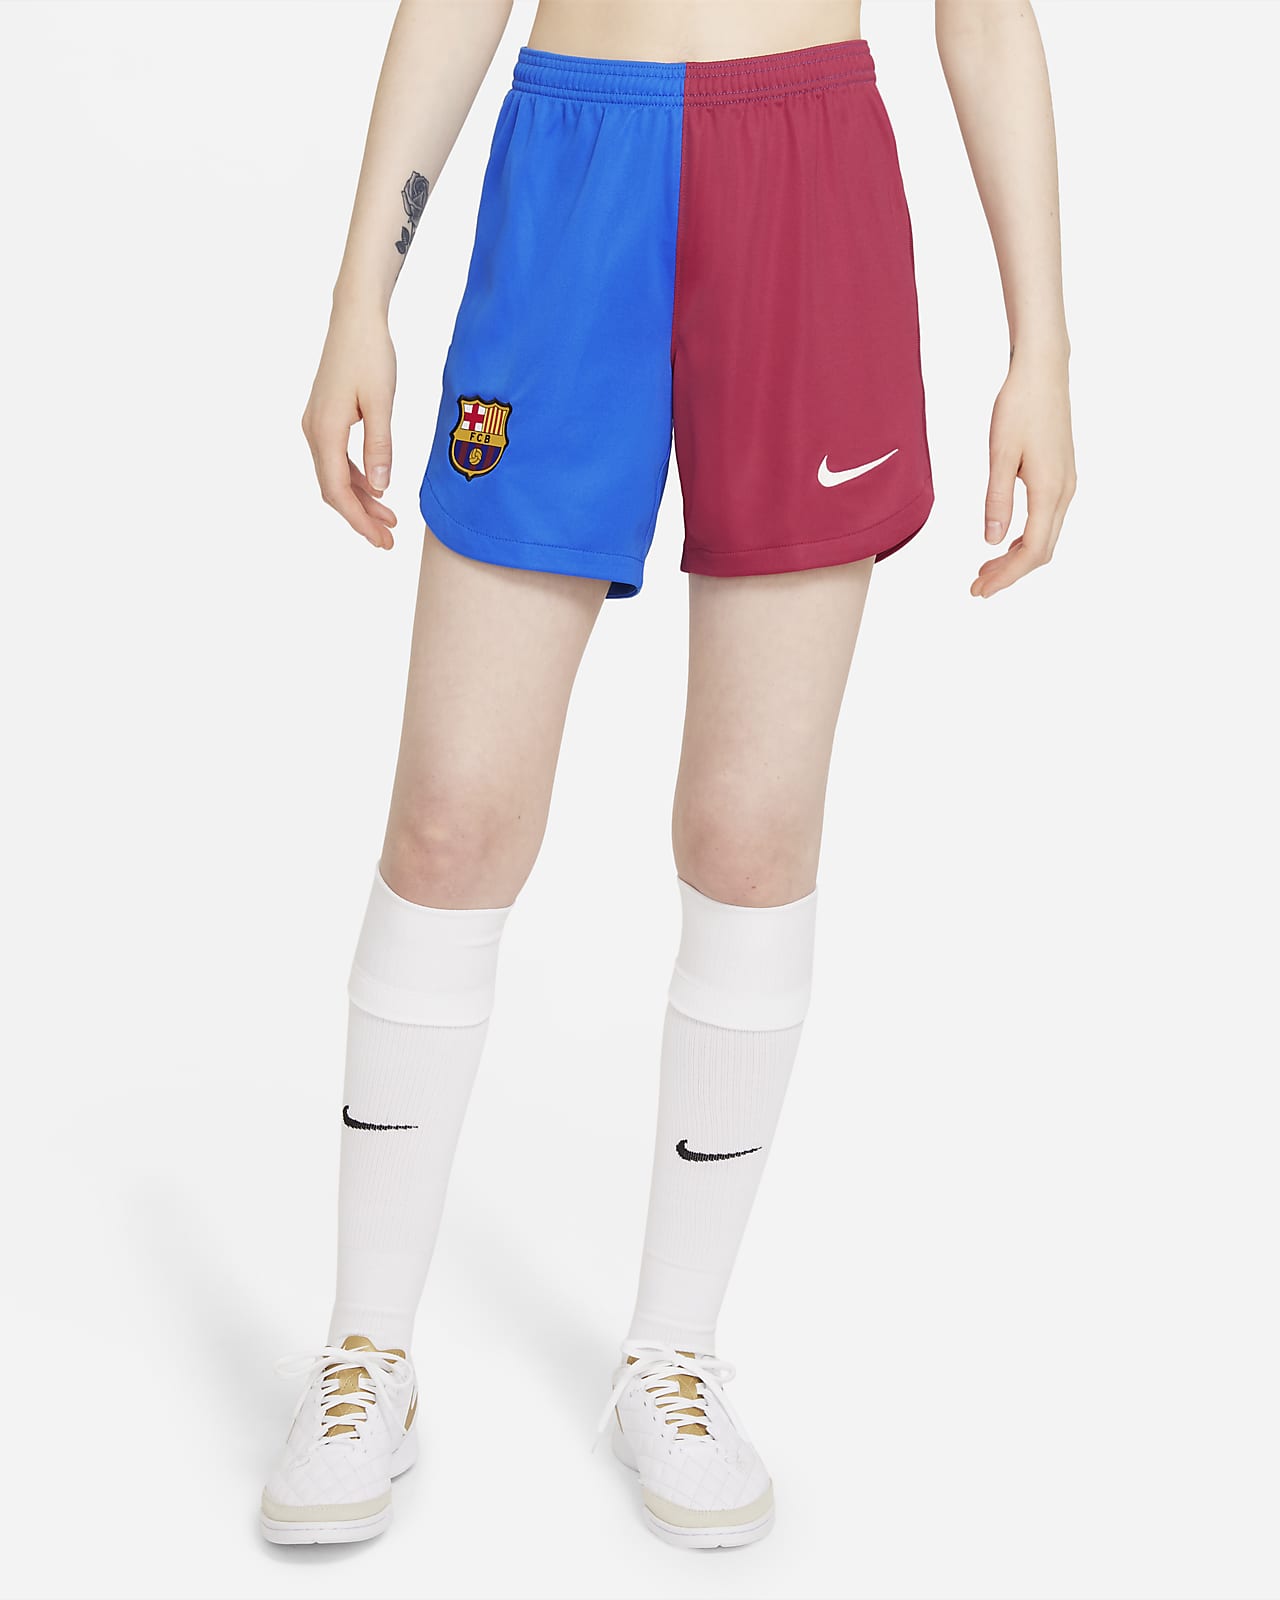 Barcelona 2021/22 Stadium Home Women's Shorts.